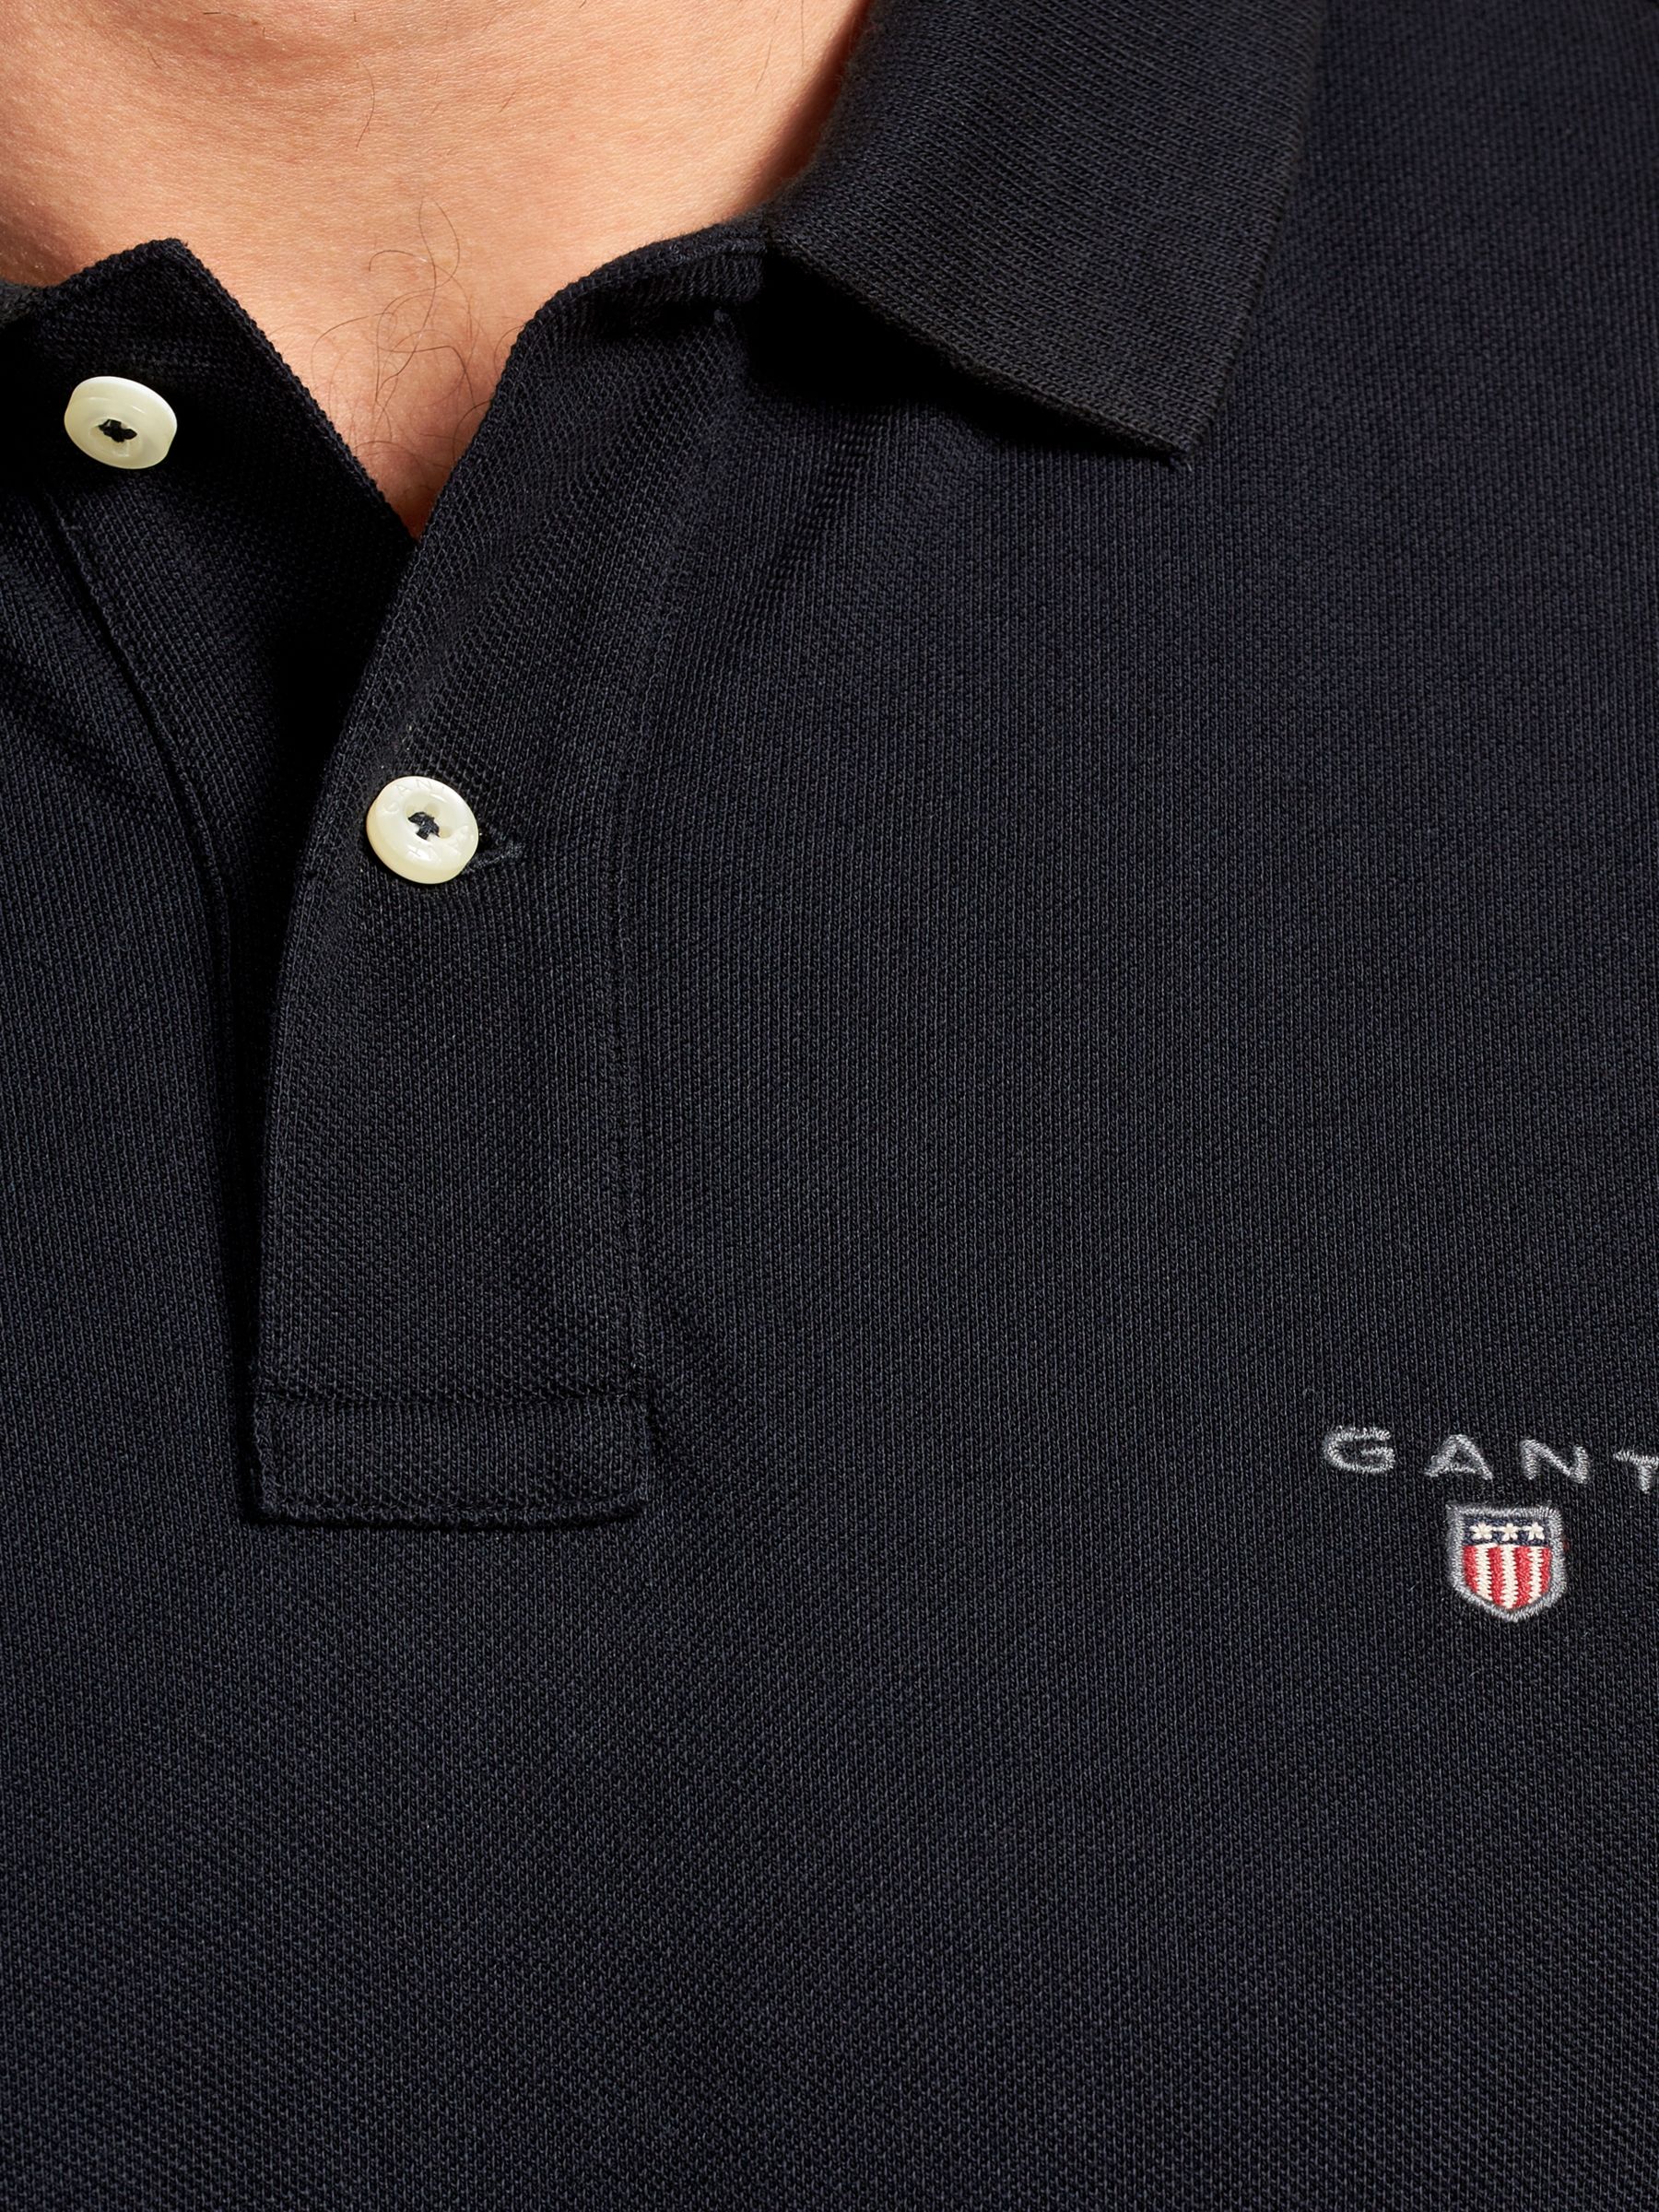 GANT Solid Pique Polo Shirt, Marine at John Lewis & Partners